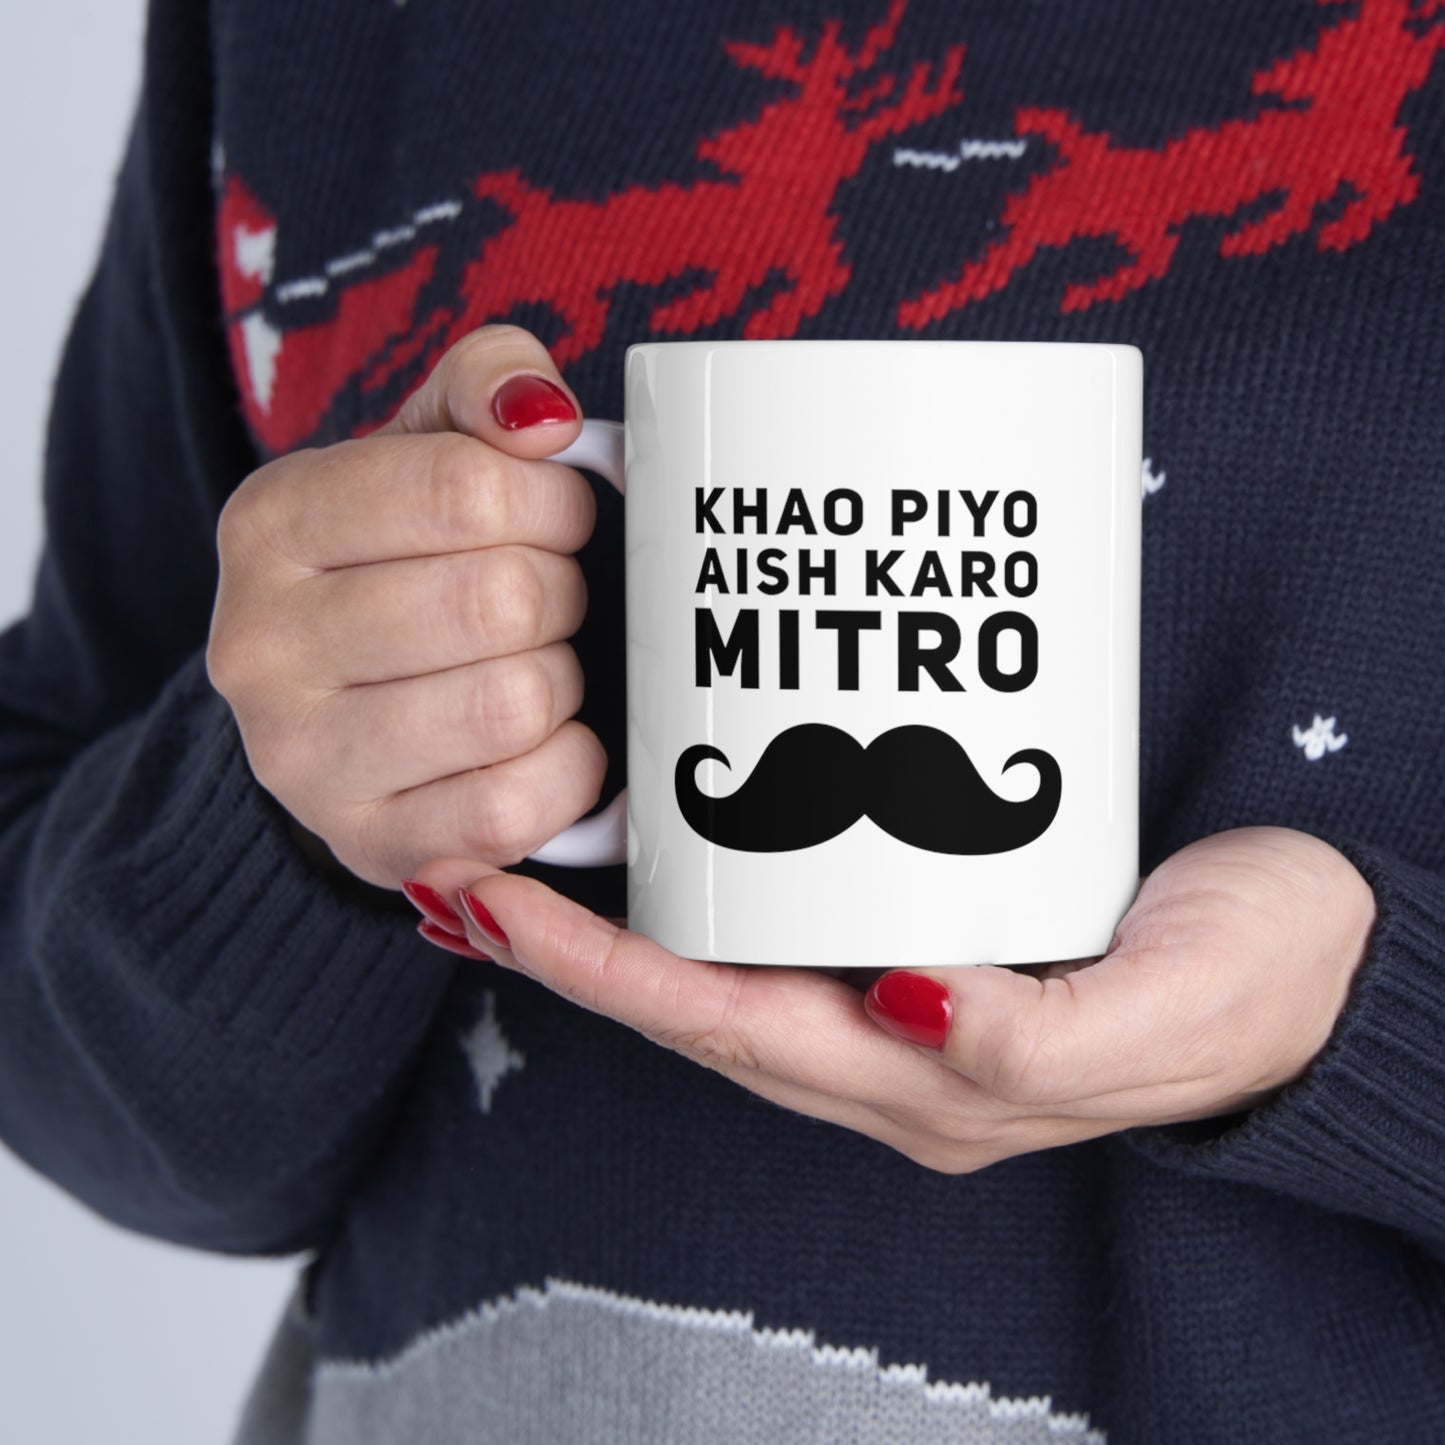 
                  
                    Khao Piyo Aish Karo Male Mug
                  
                